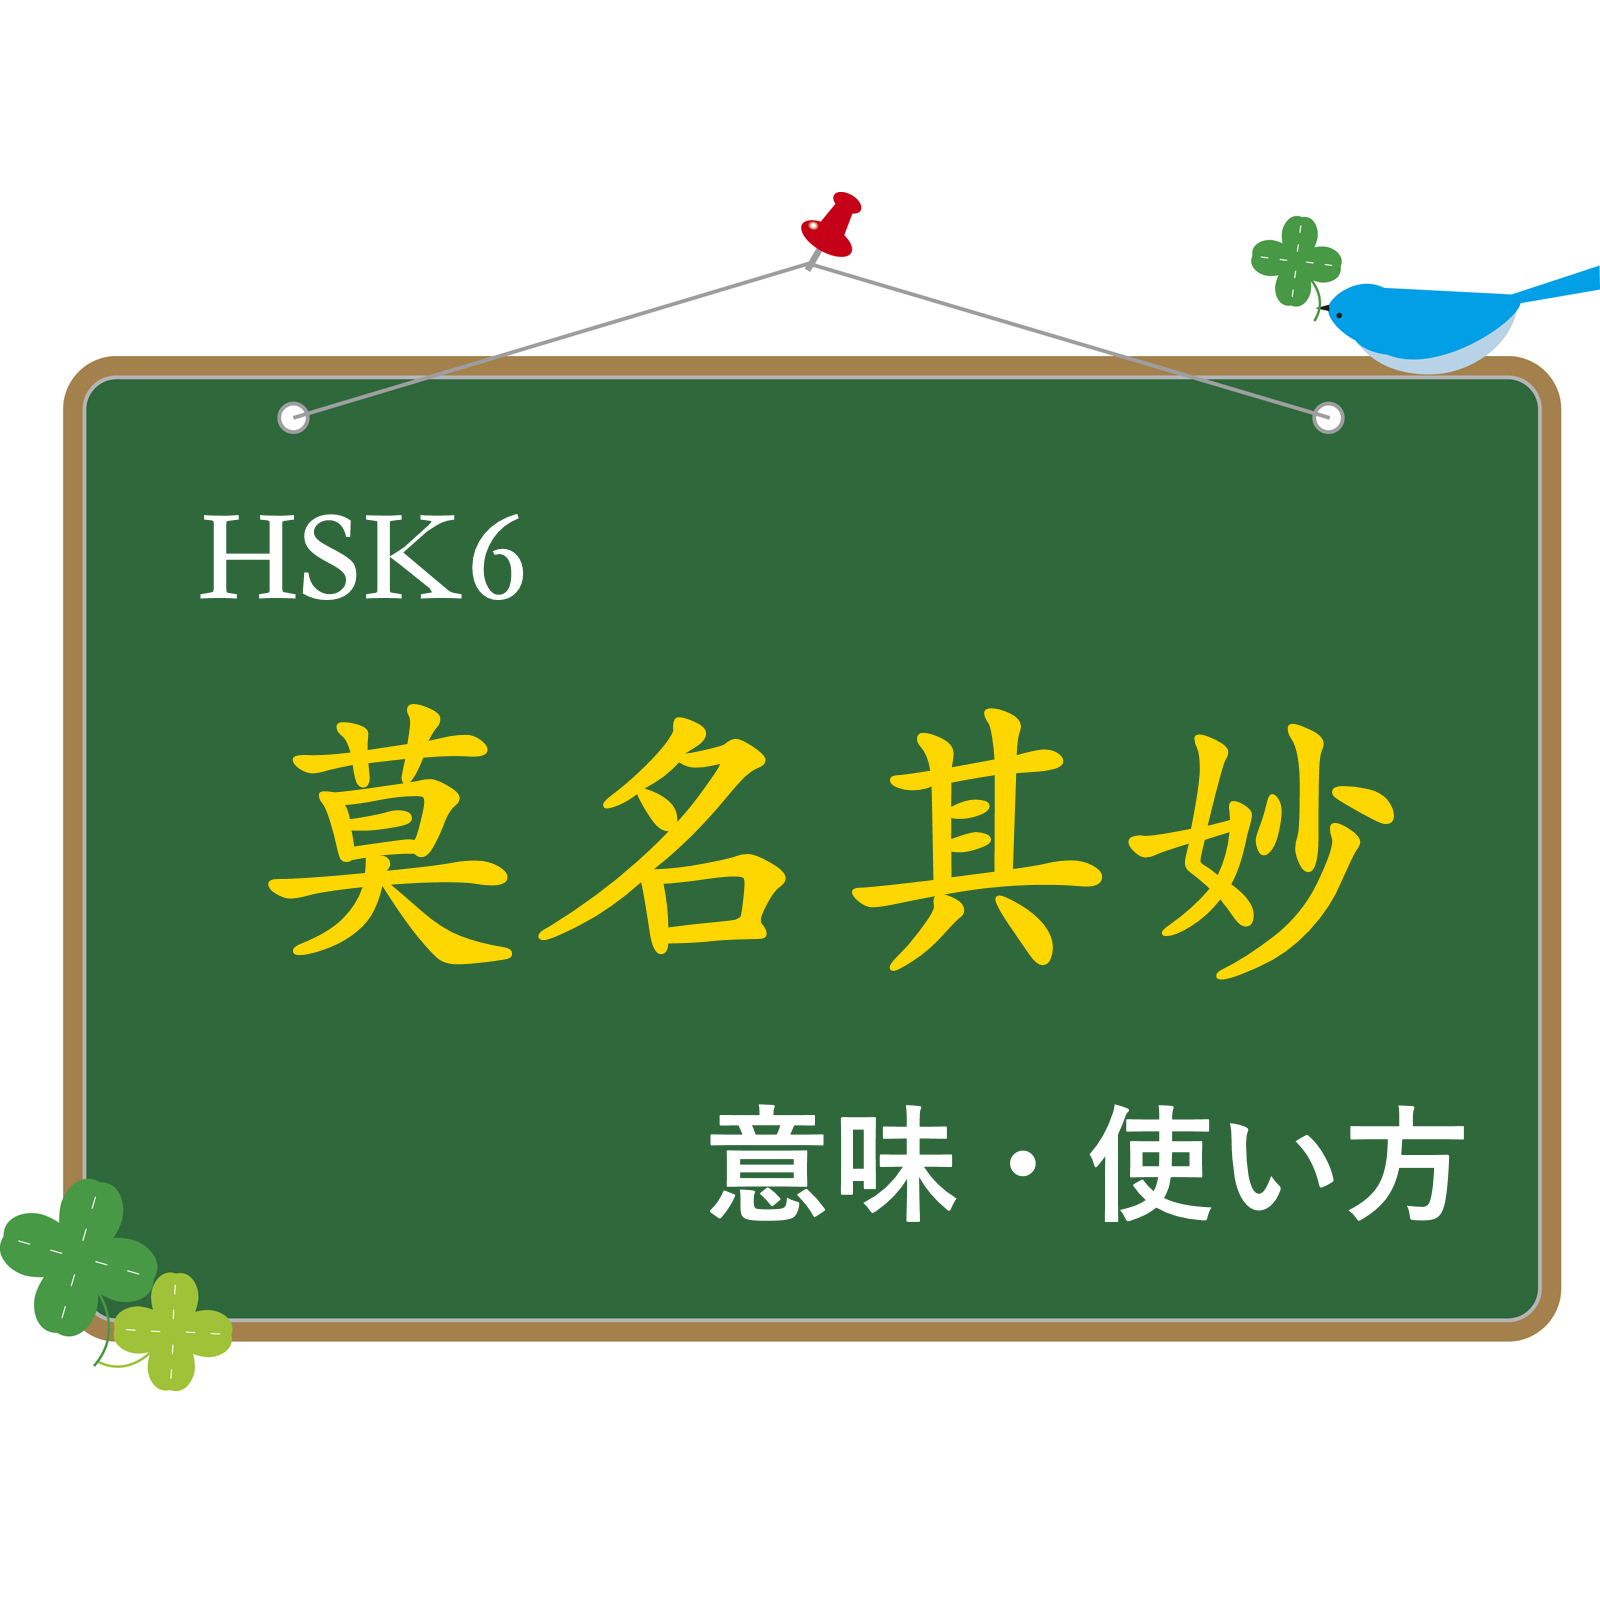 Hsk6級成語 莫名其妙 の意味や使い方を解説 成语の攻略で中国語の理解に更なる深みを このめの中国語